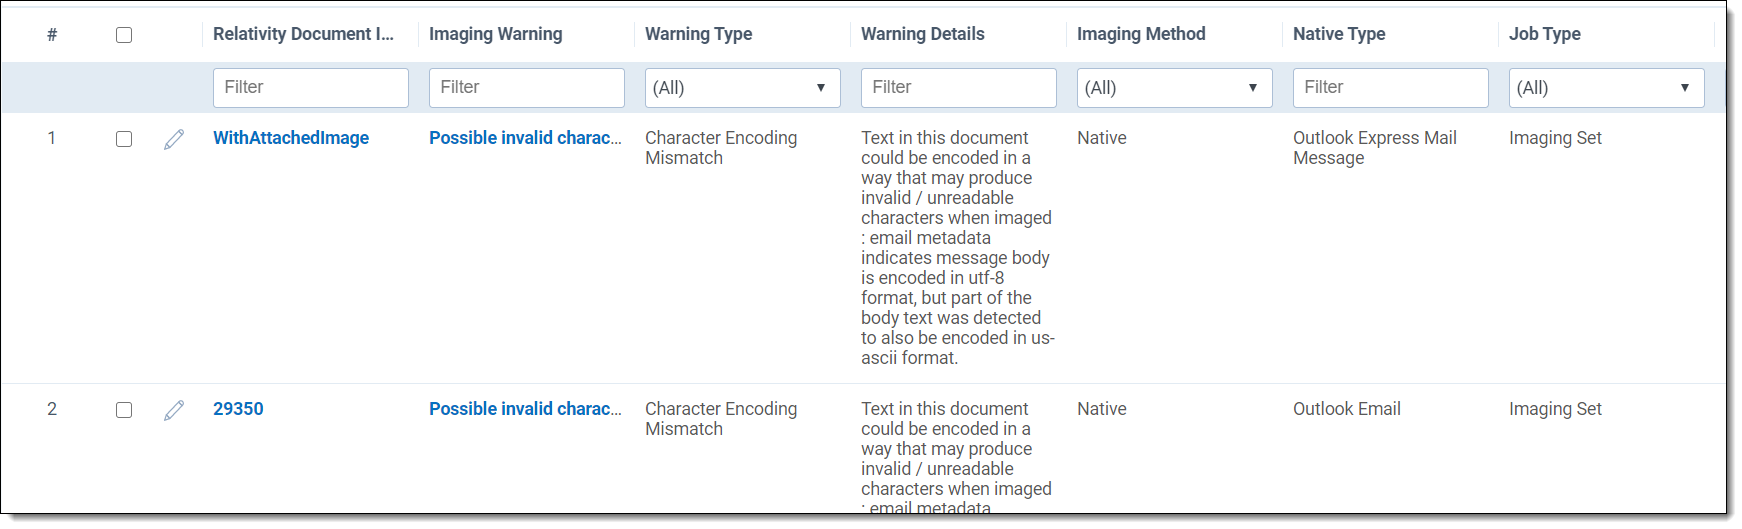 Imaging Warnings tab